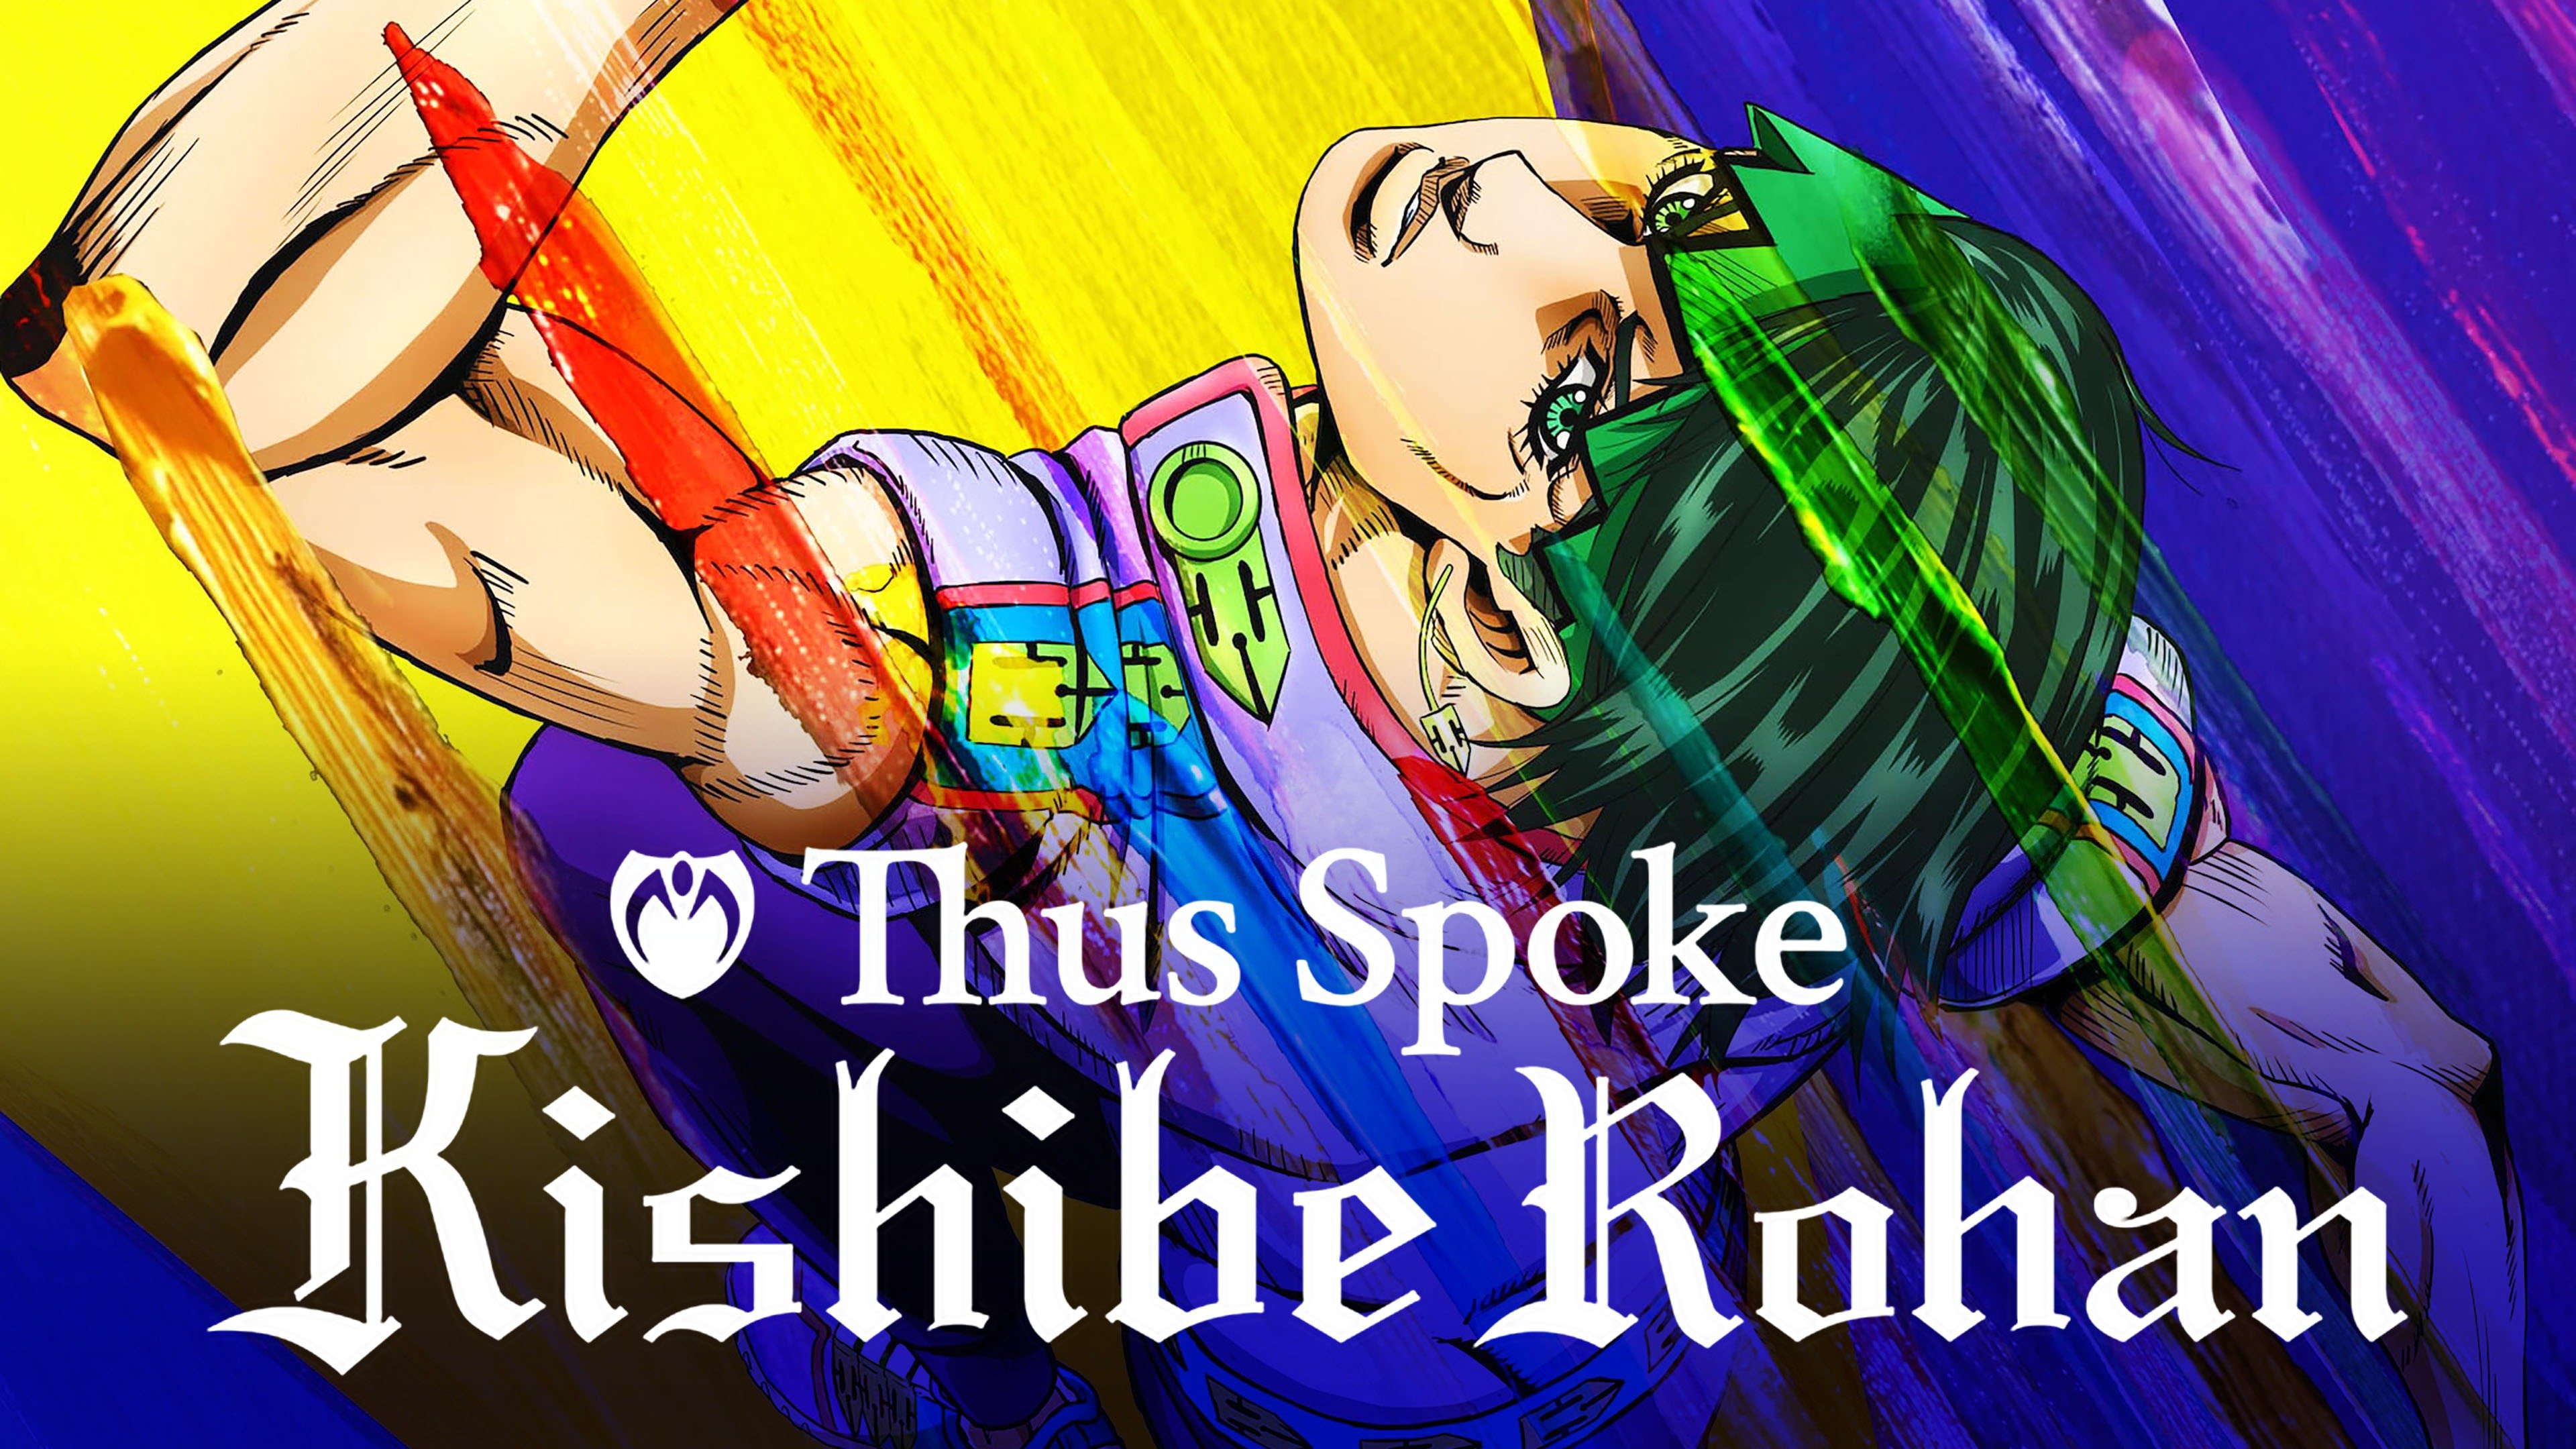 Rohans exercise routine in Thus Spoke Kishibe Rohan Manga OVA TV Drama  and Part 4 Anime  rStardustCrusaders